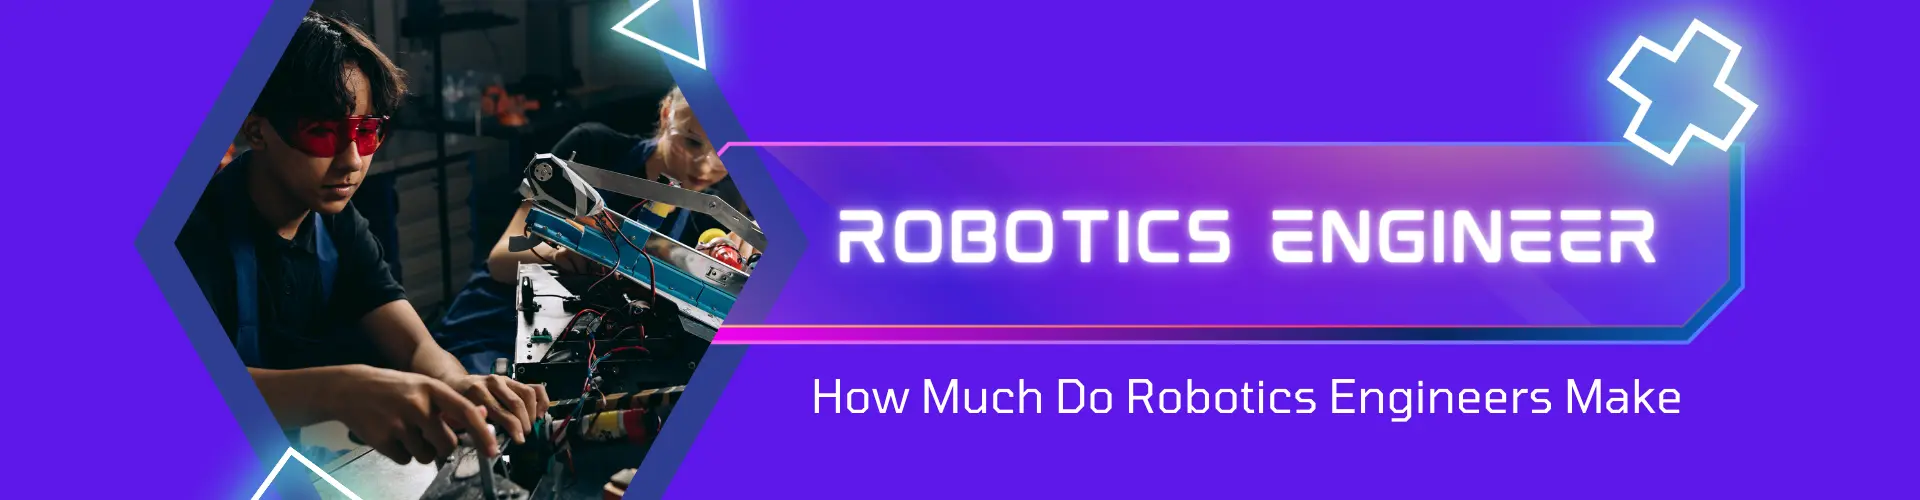 How Much Do Robotics Engineers Make